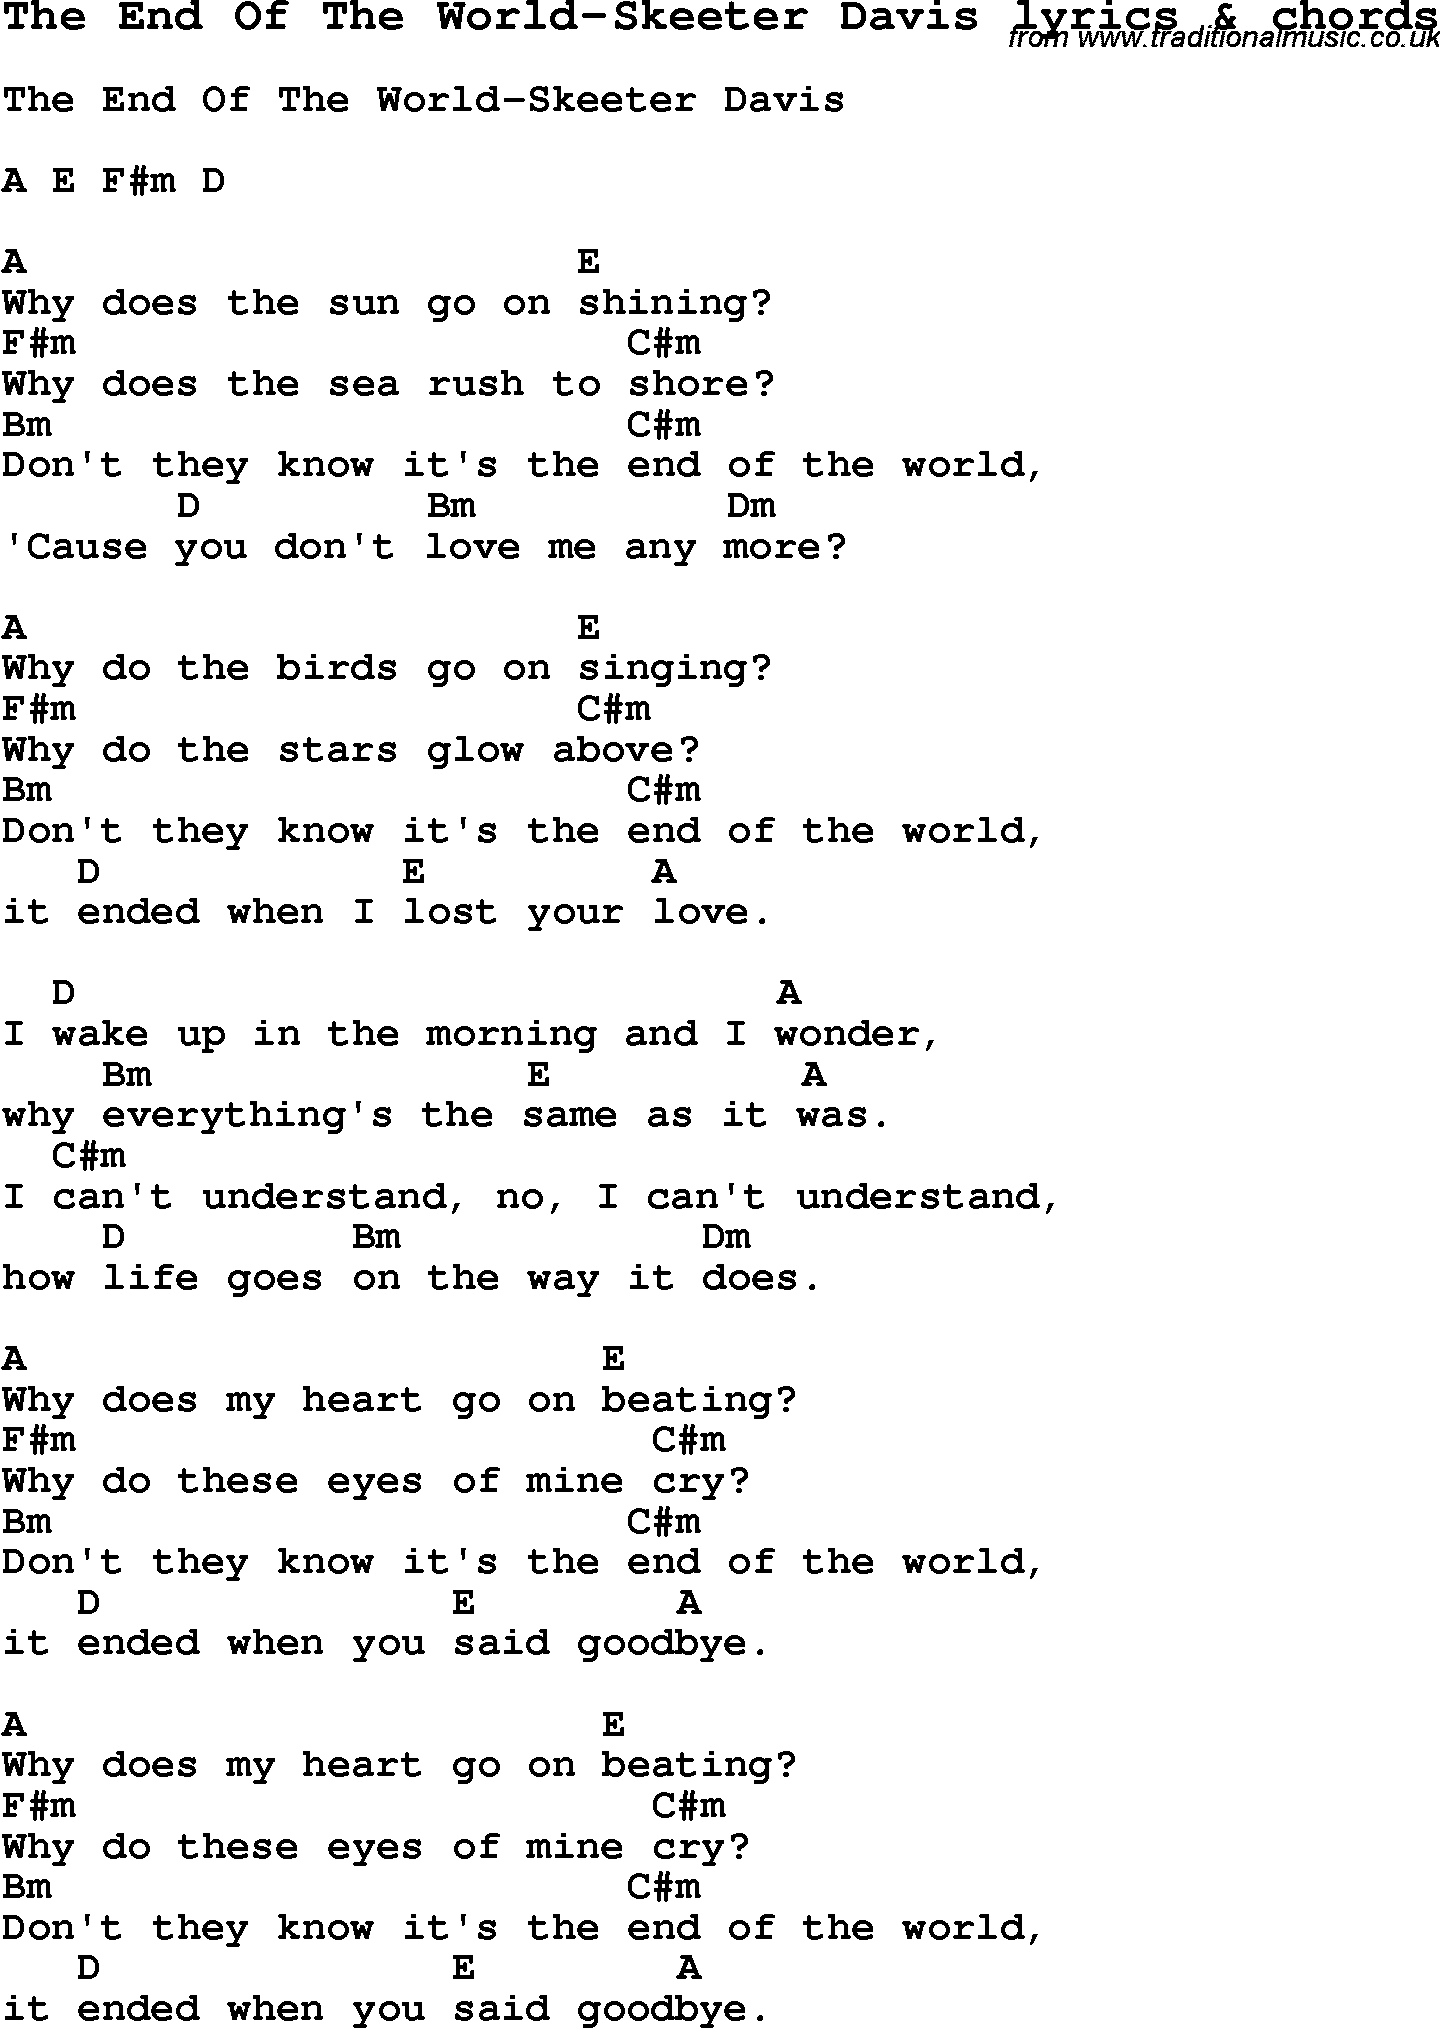 Love Song Lyrics for: The End Of The World-Skeeter Davis with chords for Ukulele, Guitar Banjo etc.